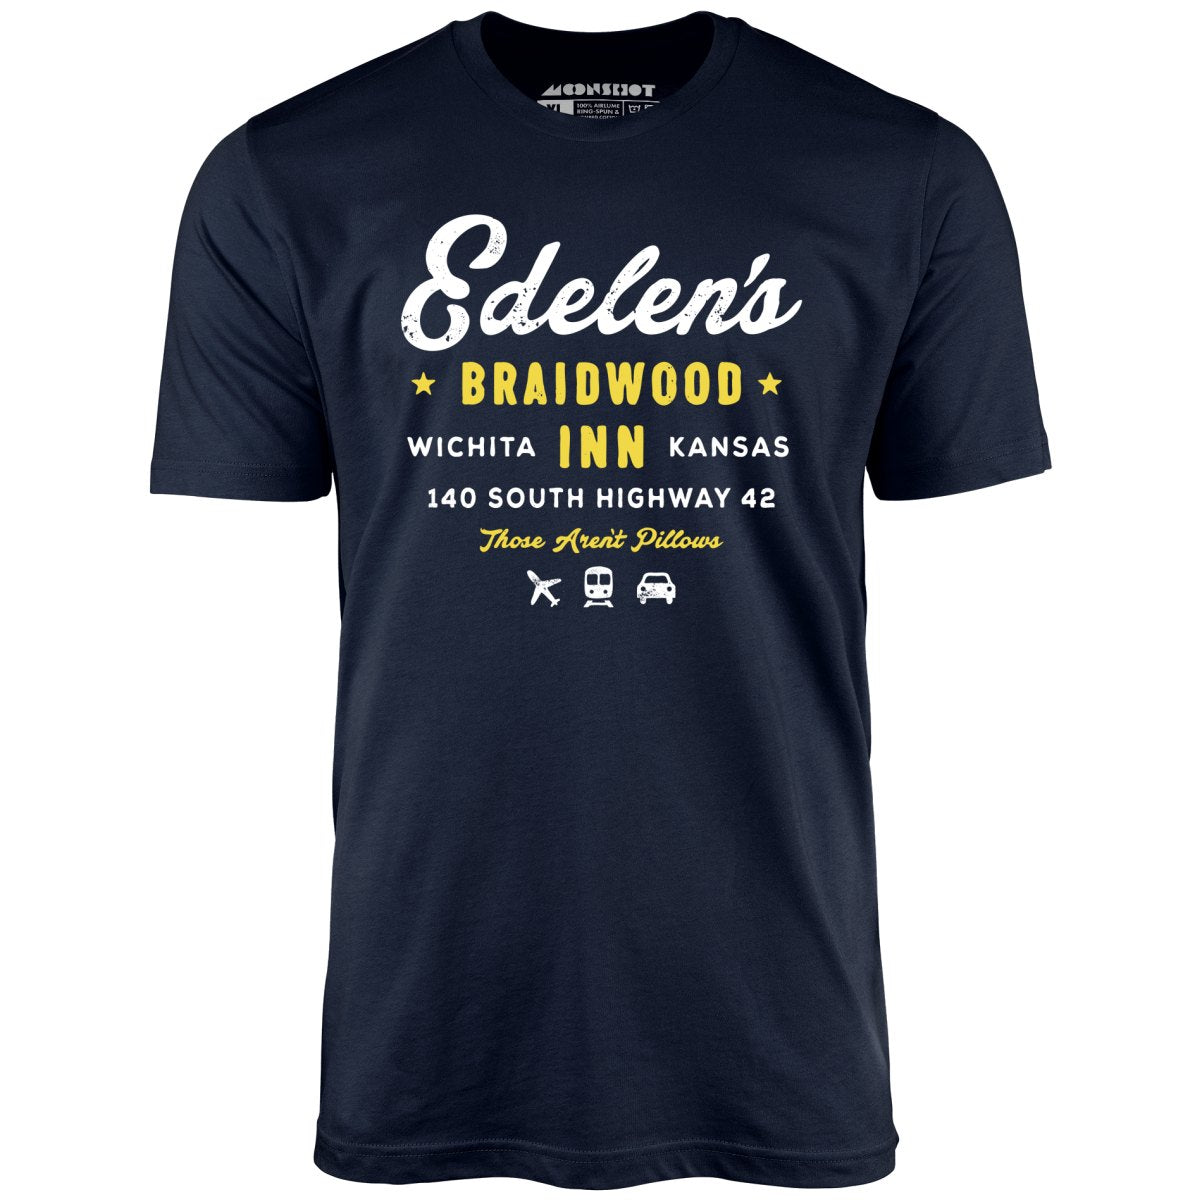 Edelen's Braidwood Inn - Unisex T-Shirt